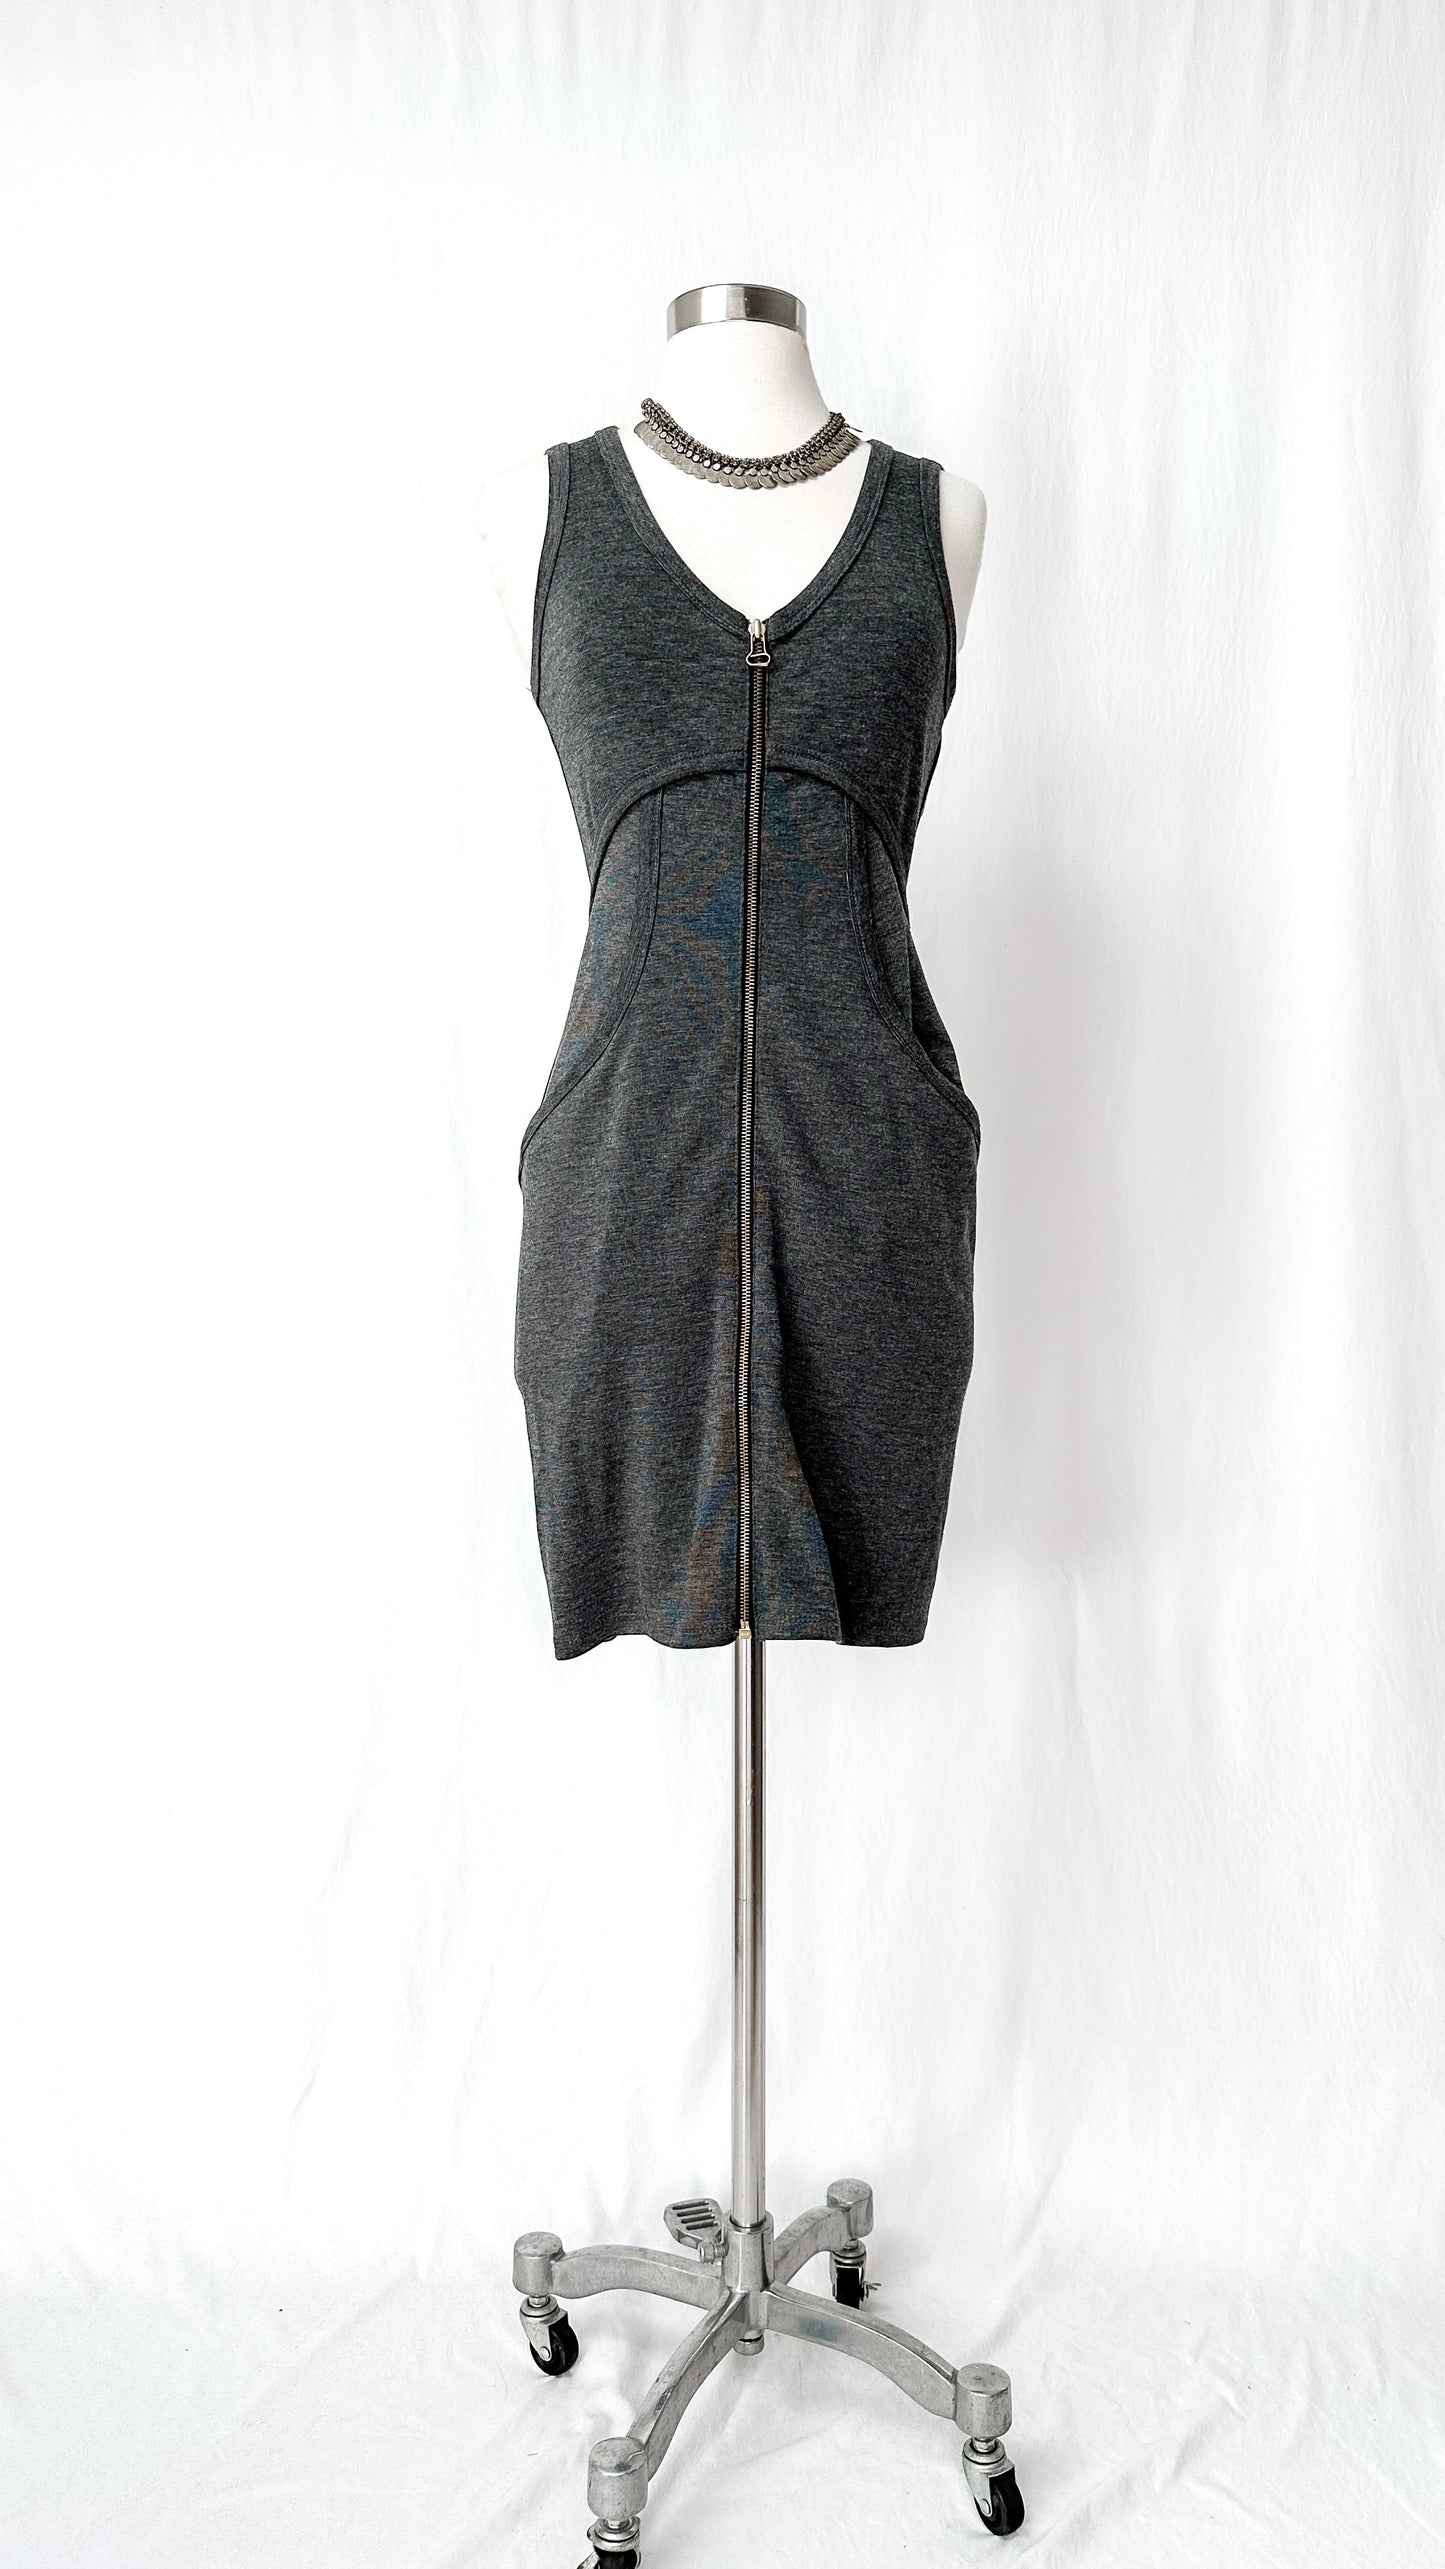 T by Alexander Wang Charcoal Grey Full Zip Dress (XS)